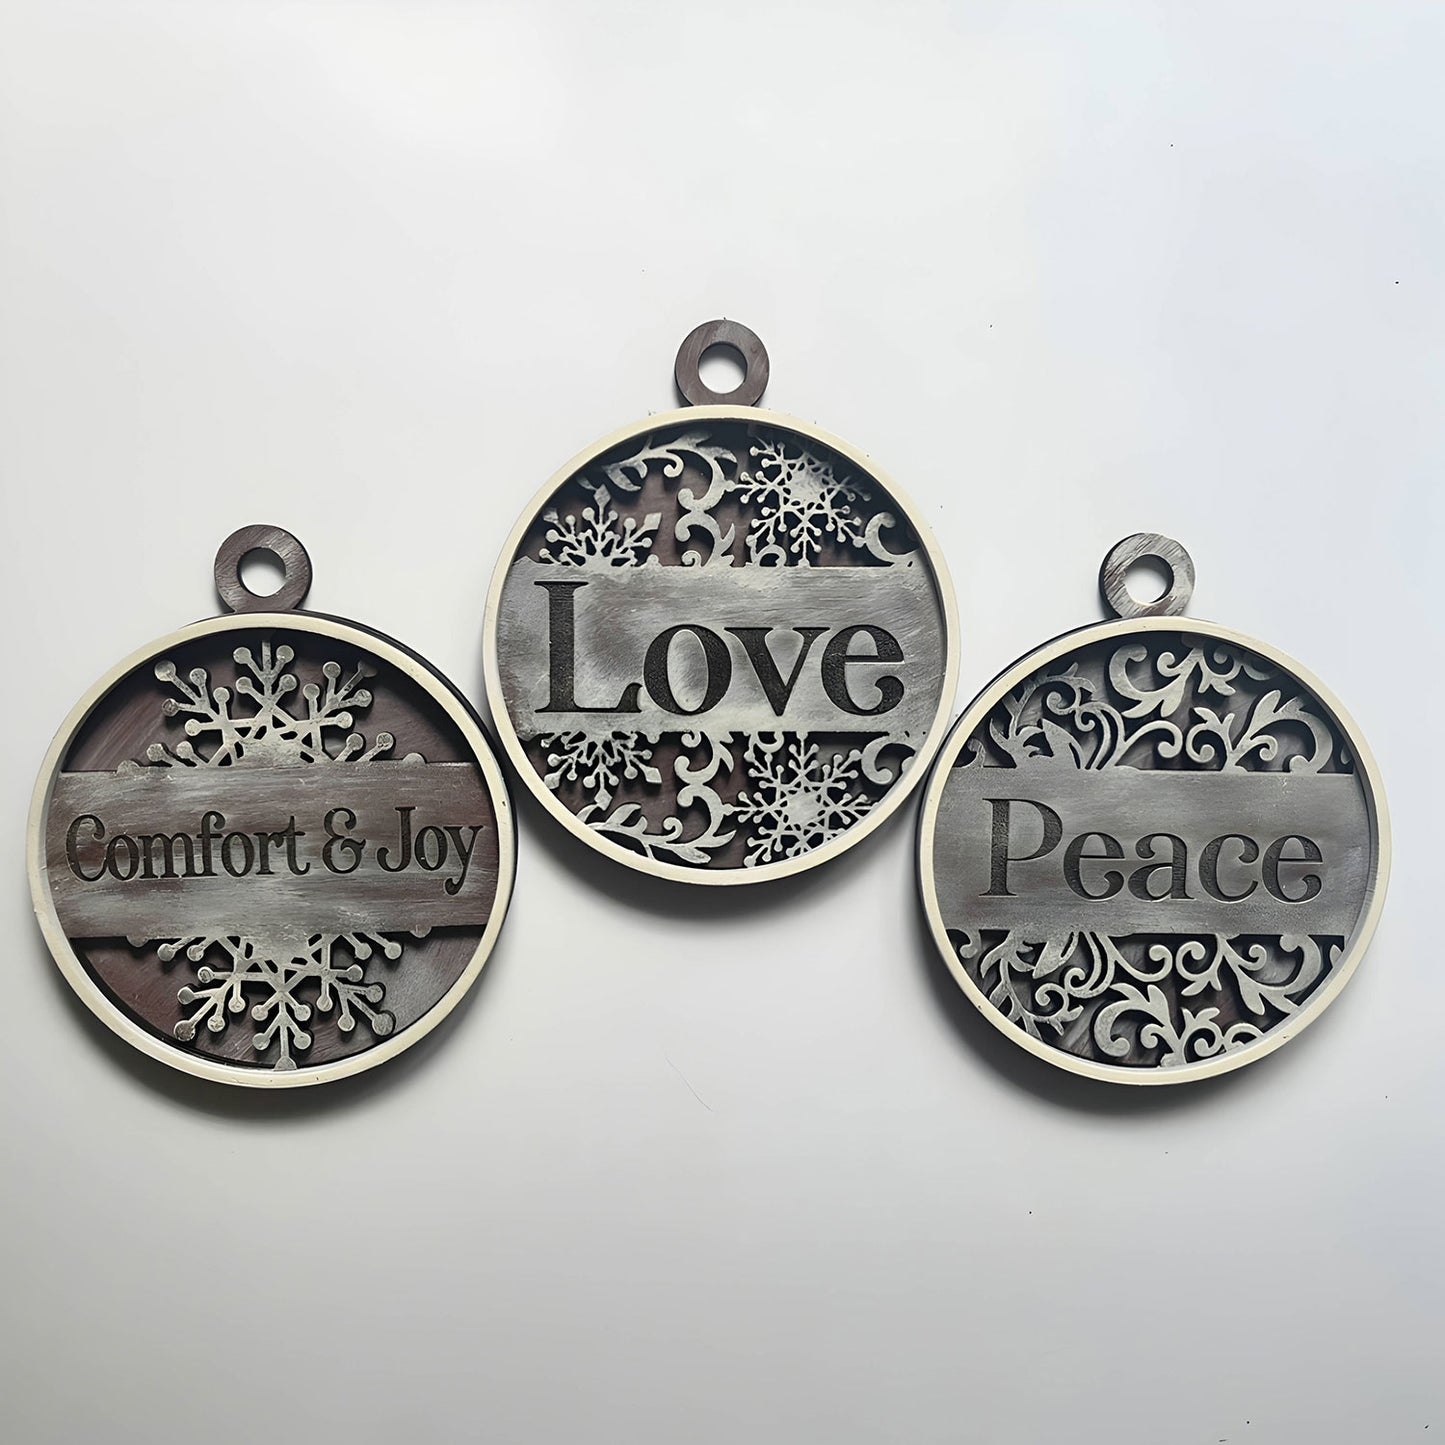 Engraved Flourish Ornaments - "Peace"